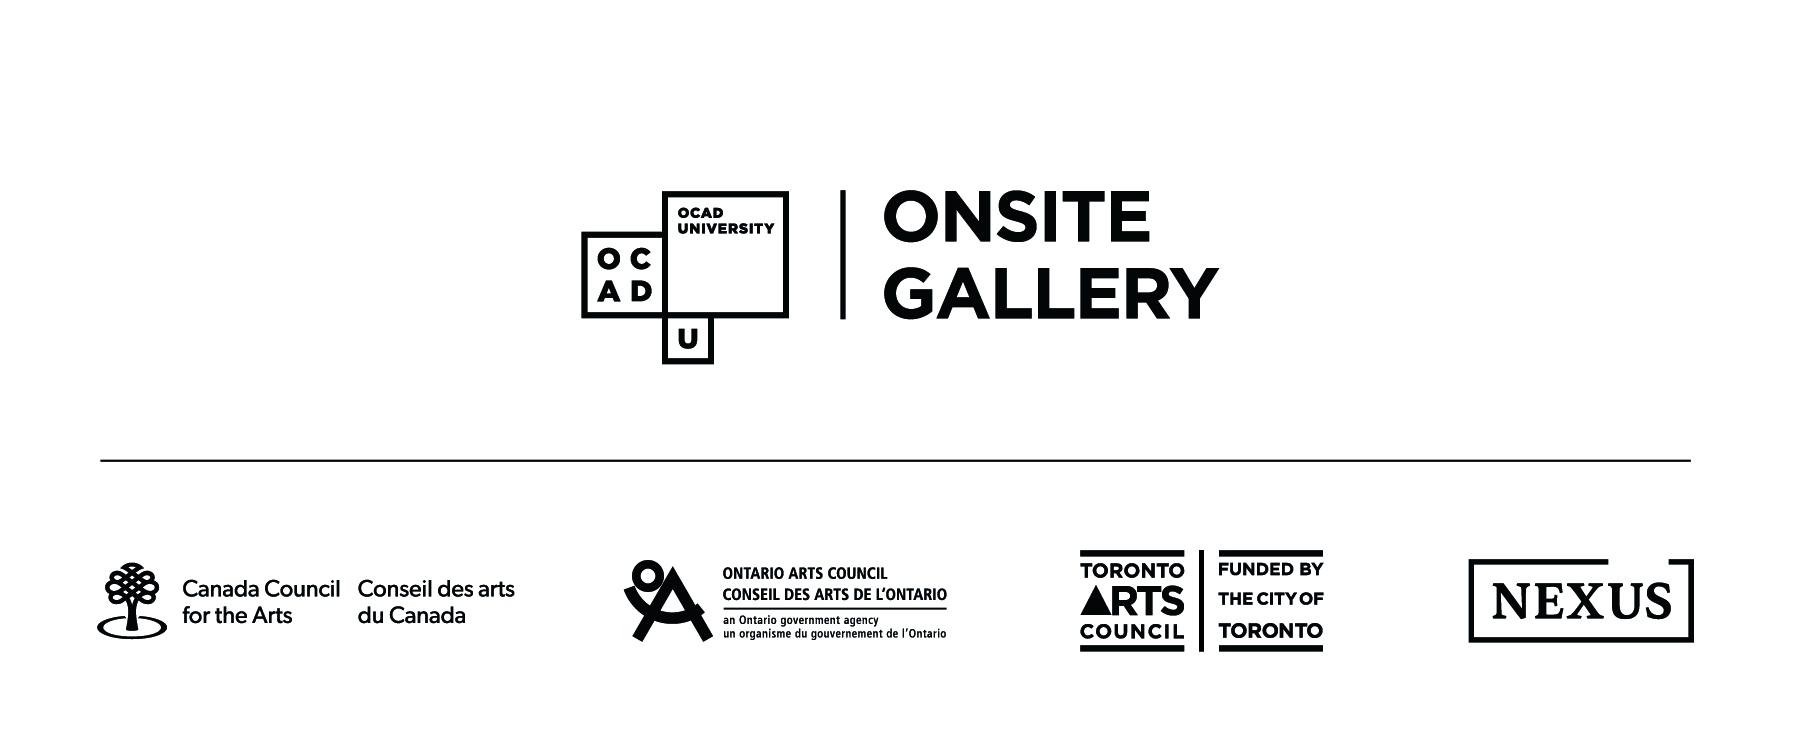 Logo lockup - OCAD University/Onsite Gallery, Canada Council for the Arts, Ontario Arts Council, Toronto Arts Council, Nexus